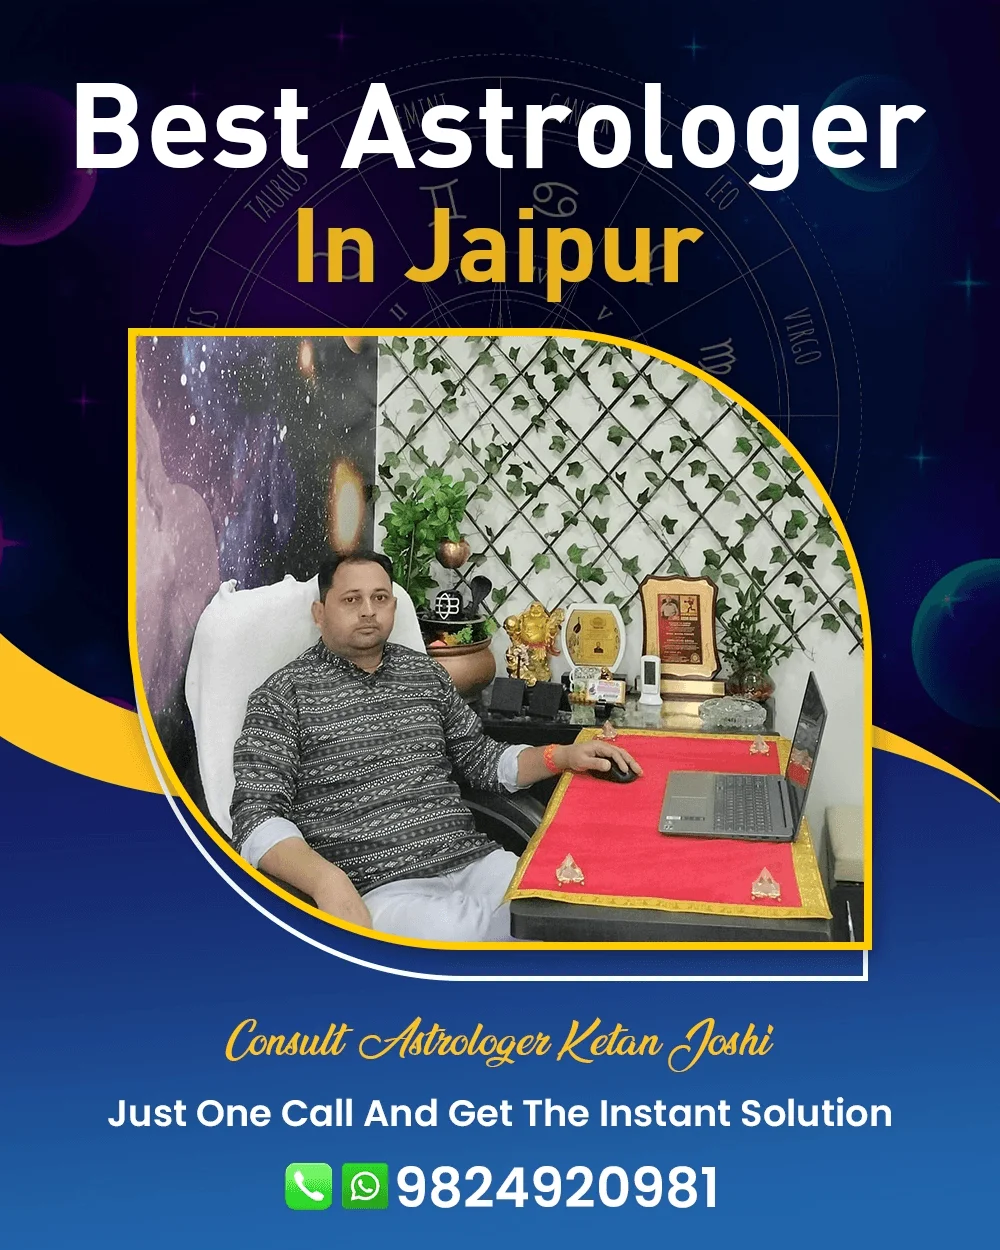 Best Astrologer In Jaipur